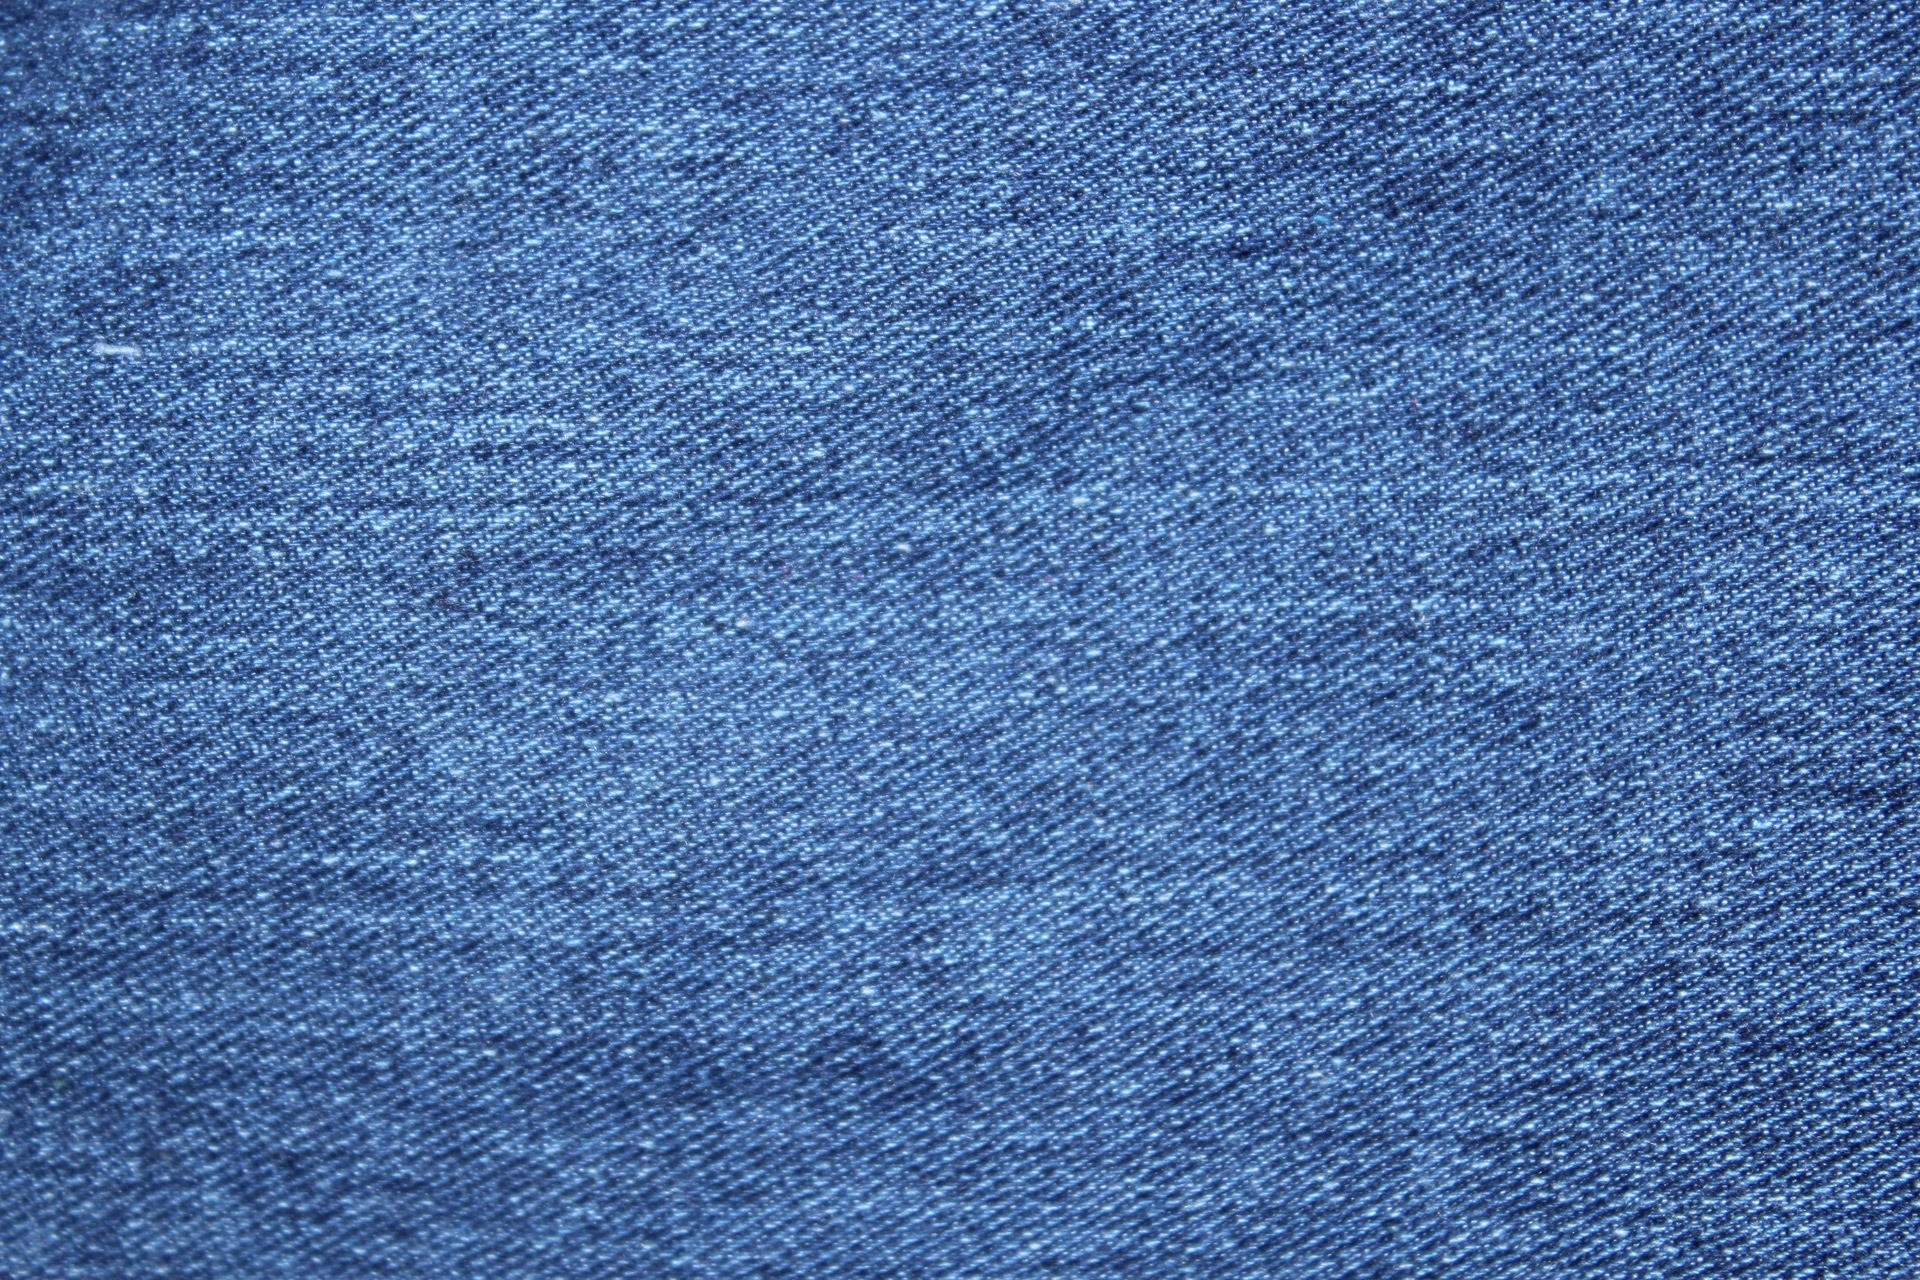 1920x1280 texture pattern blue object cloth wool material denim textile background  design wallpaper flooring blue cloth denim